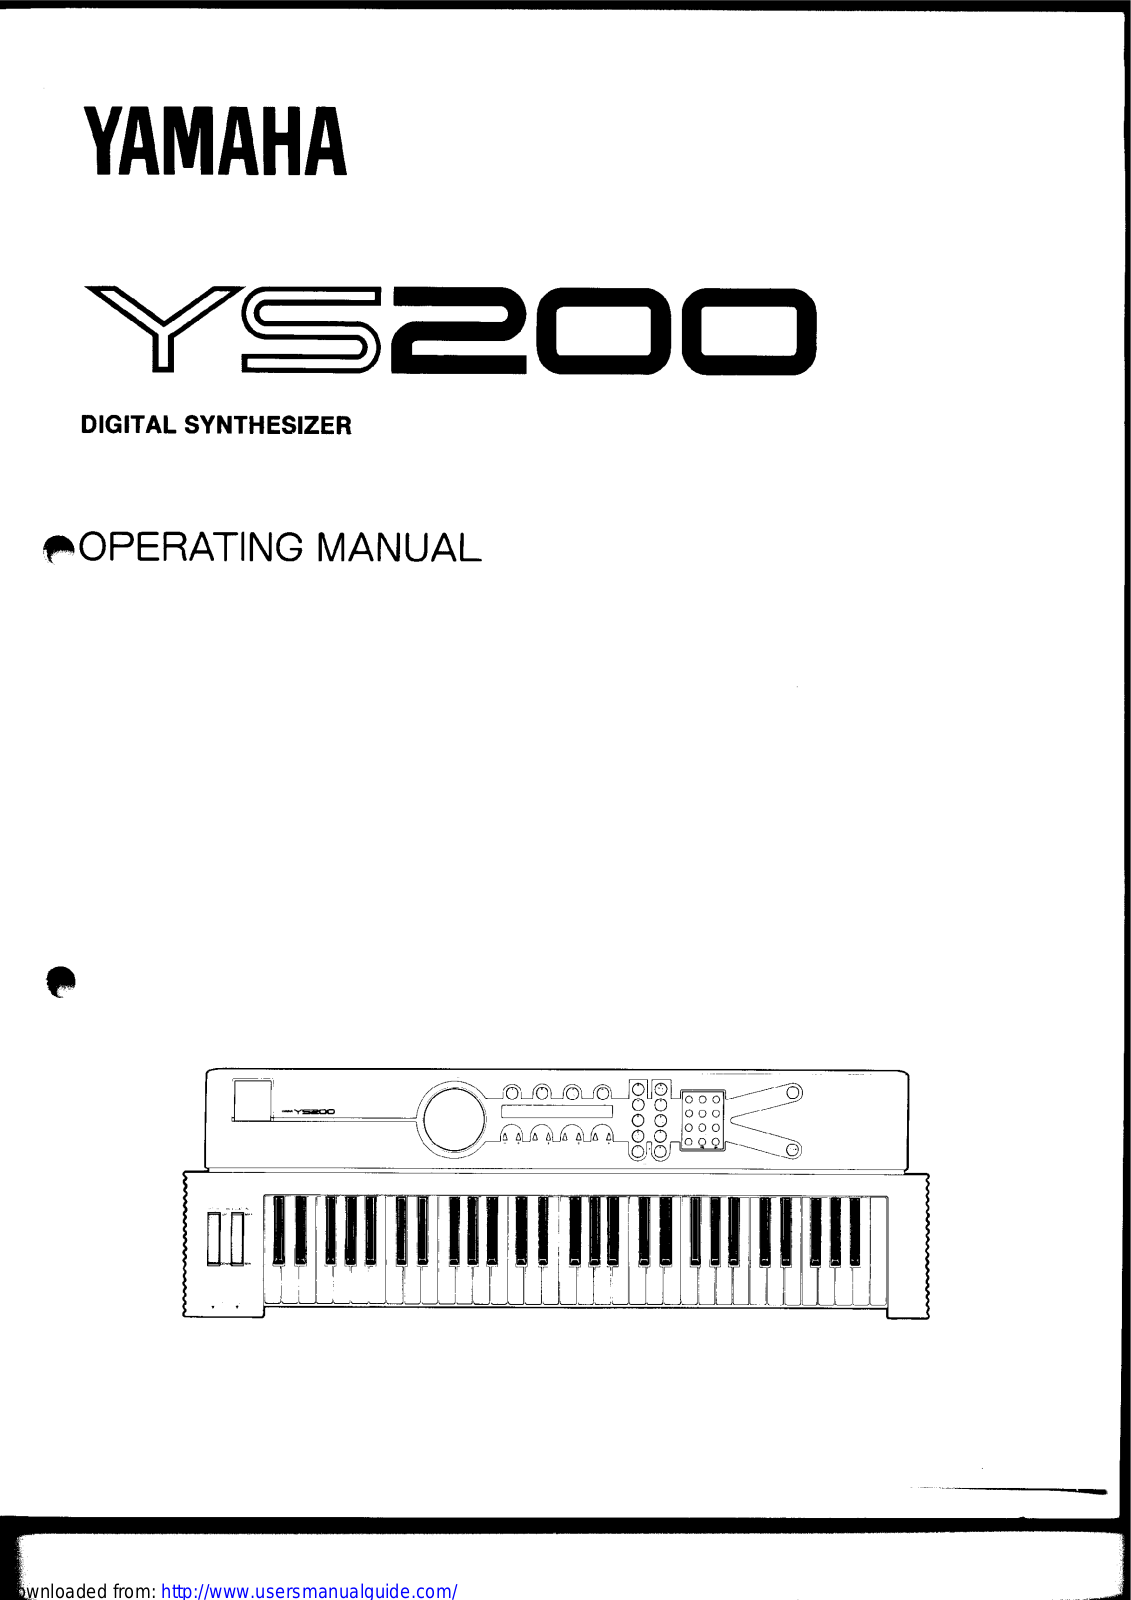 Yamaha Audio YS200 User Manual